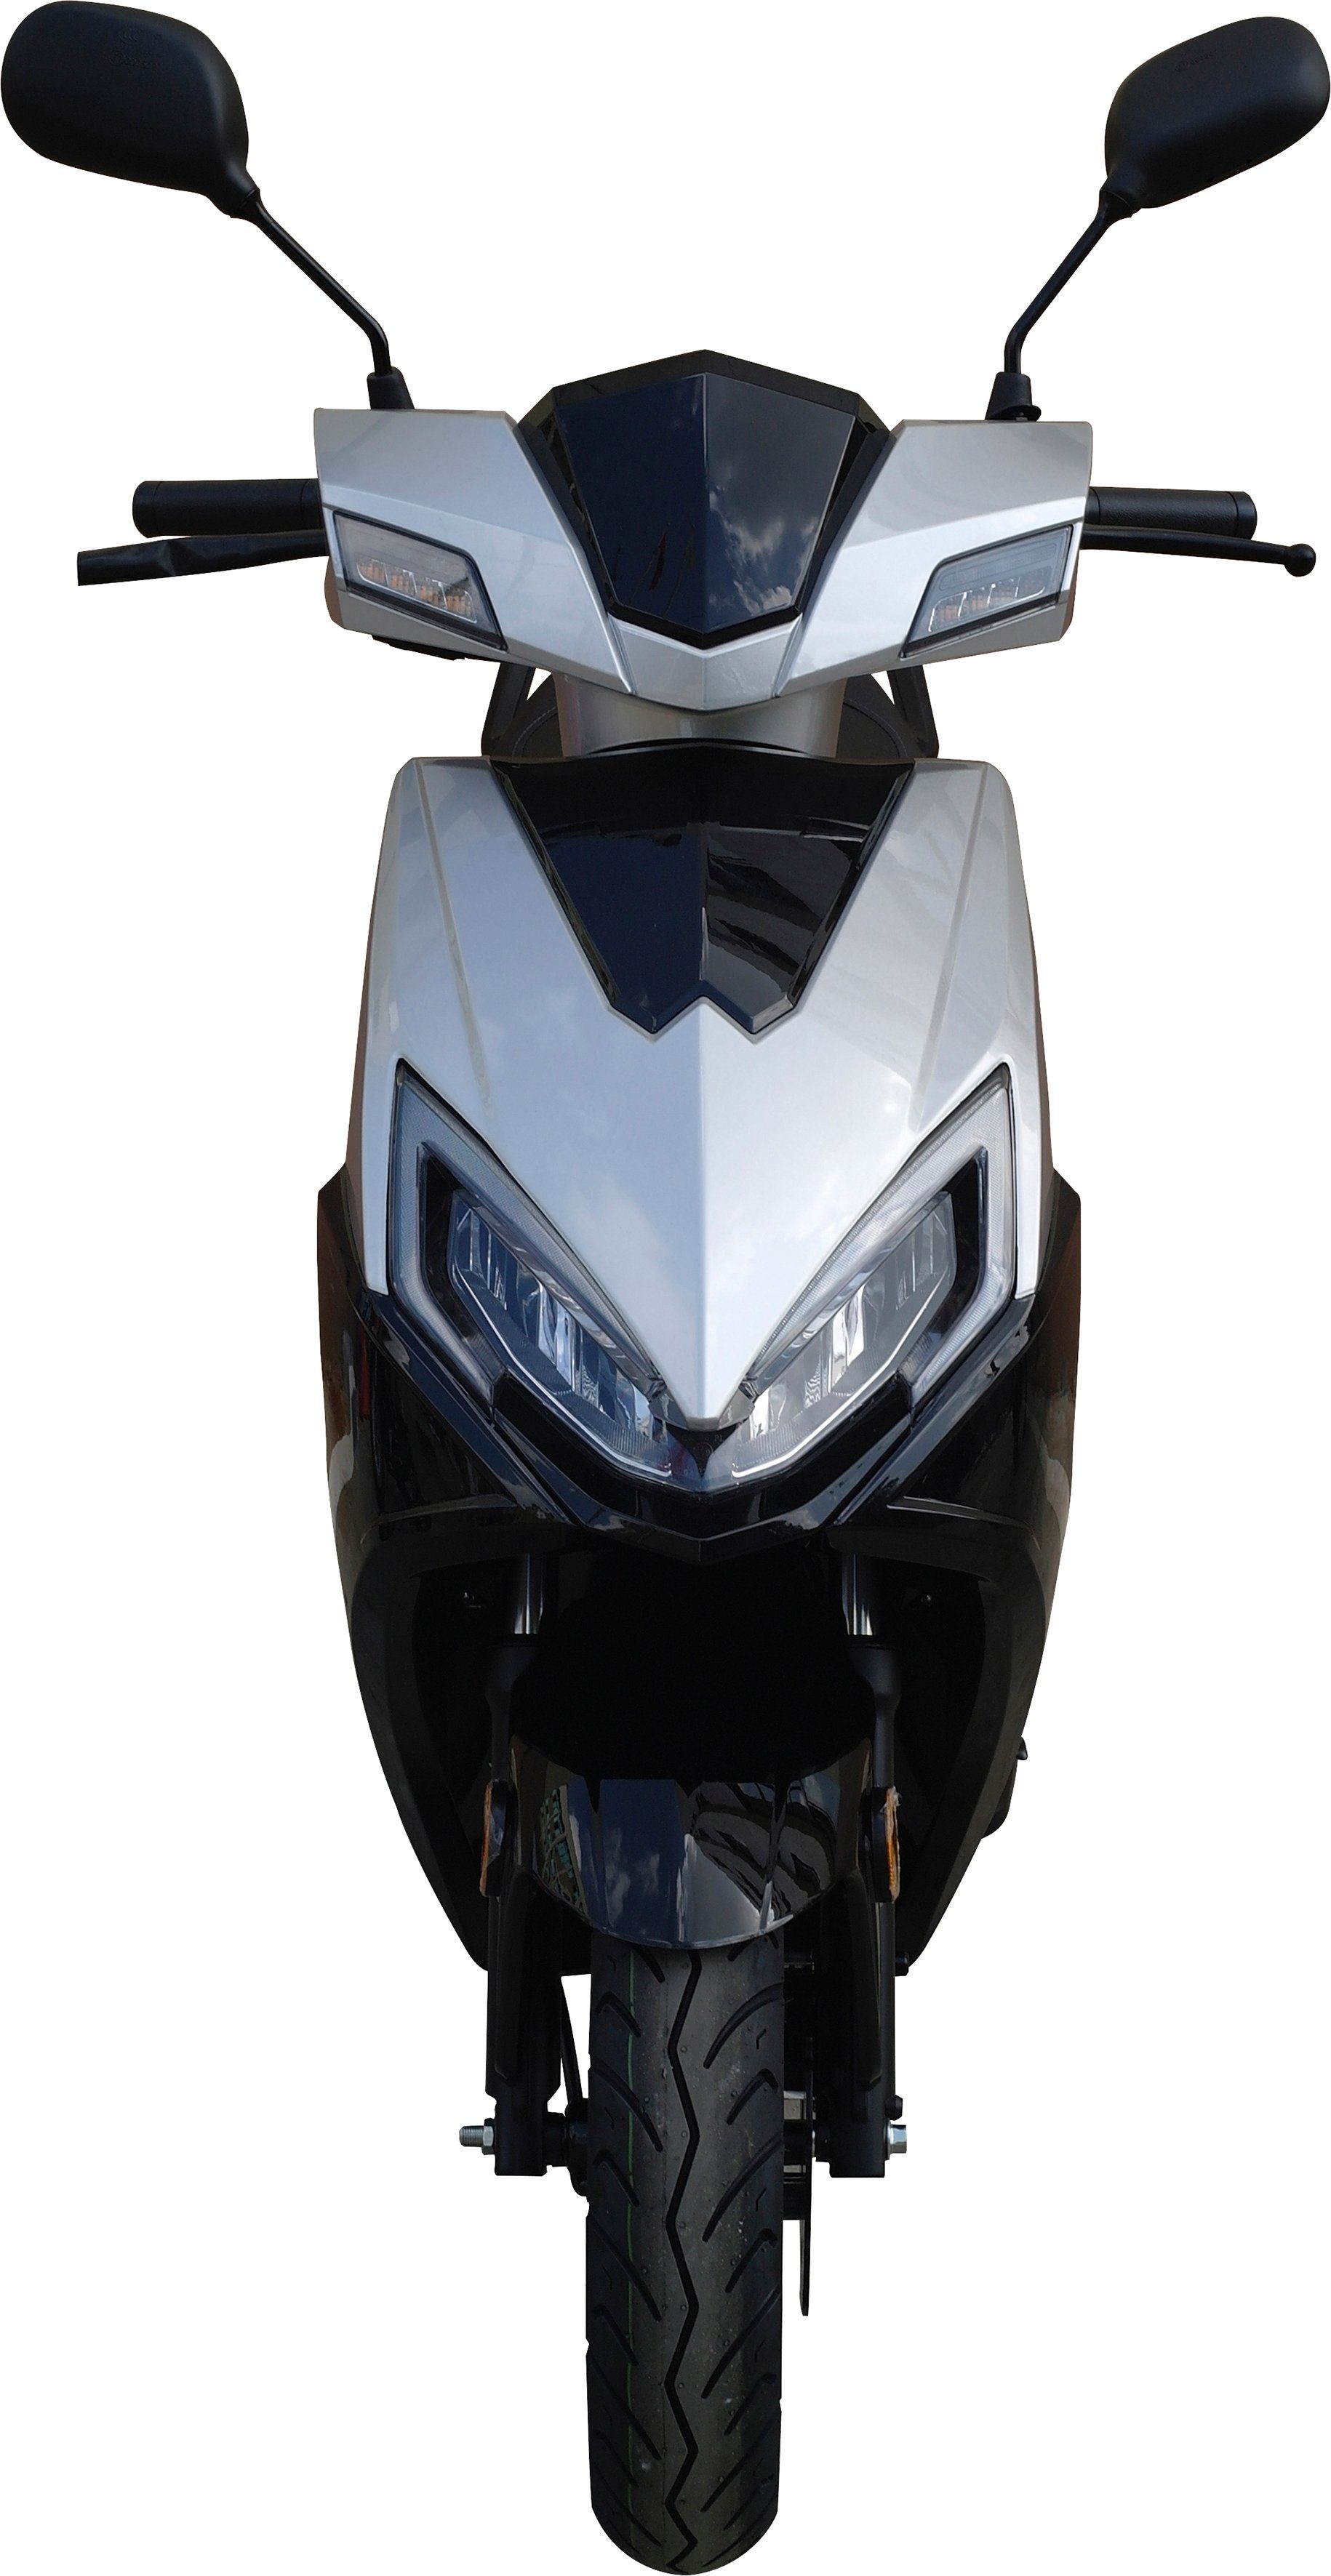 GT UNION Motorroller ccm, 50 km/h, 45 X Sonic silberfarben/schwarz 5 Euro 50-45